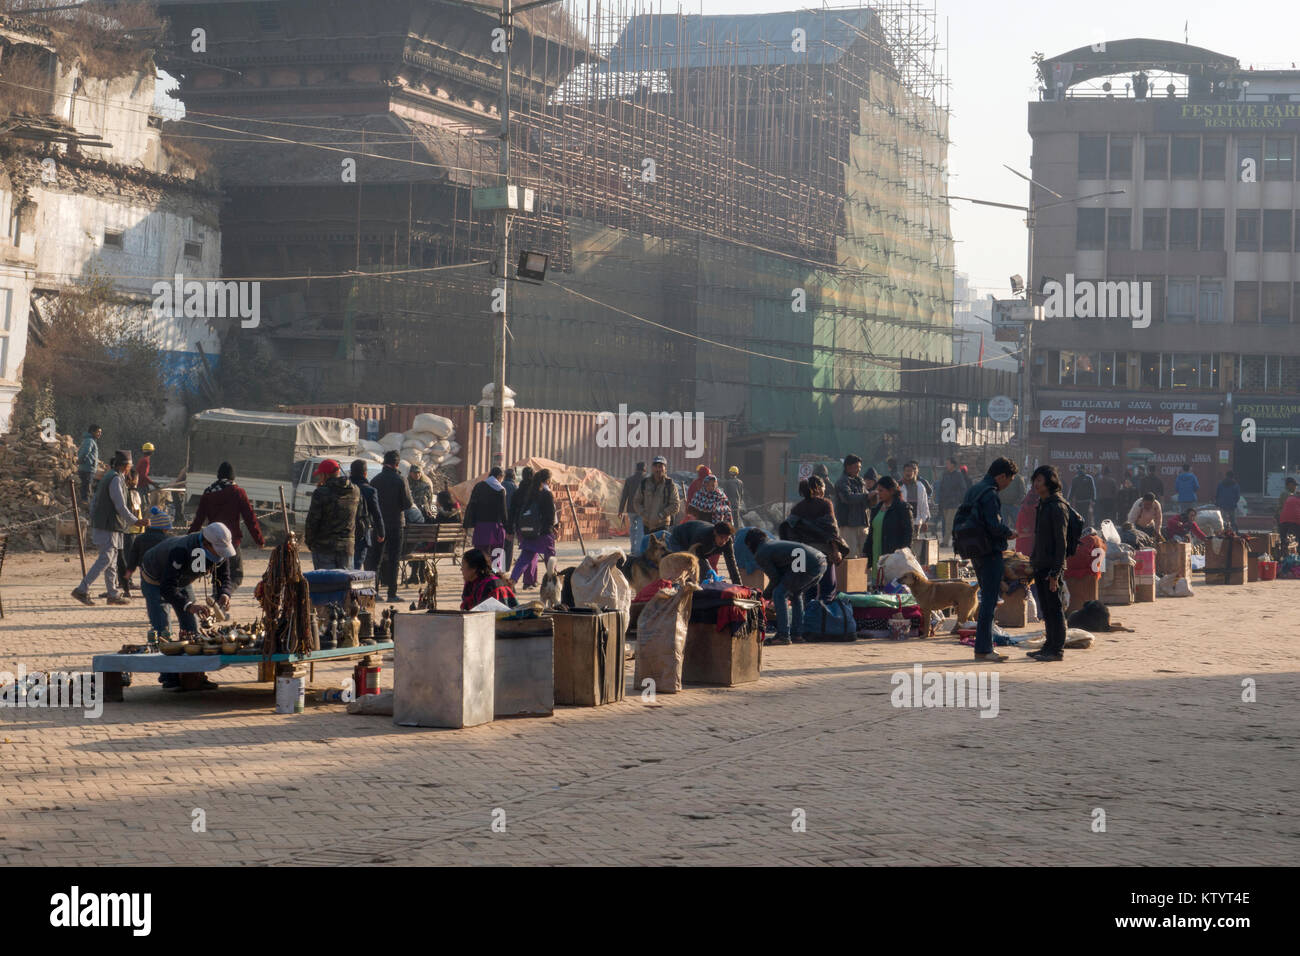 Souvenir market in Kathmandu Durbar Square Nepal Stock Photo